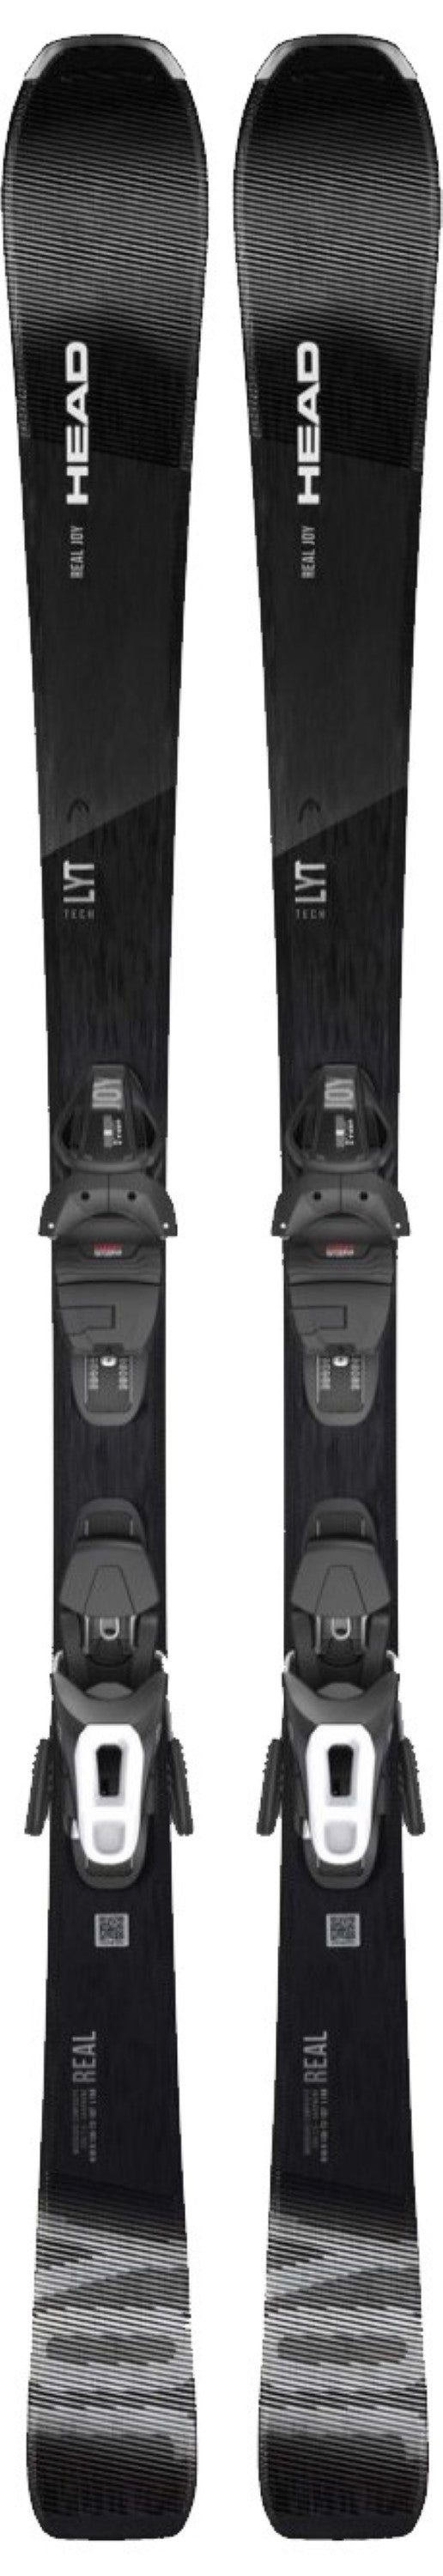 Head REAL JOY LYT Tech Ski + Bindung Joy 9 GW SLR black Damen